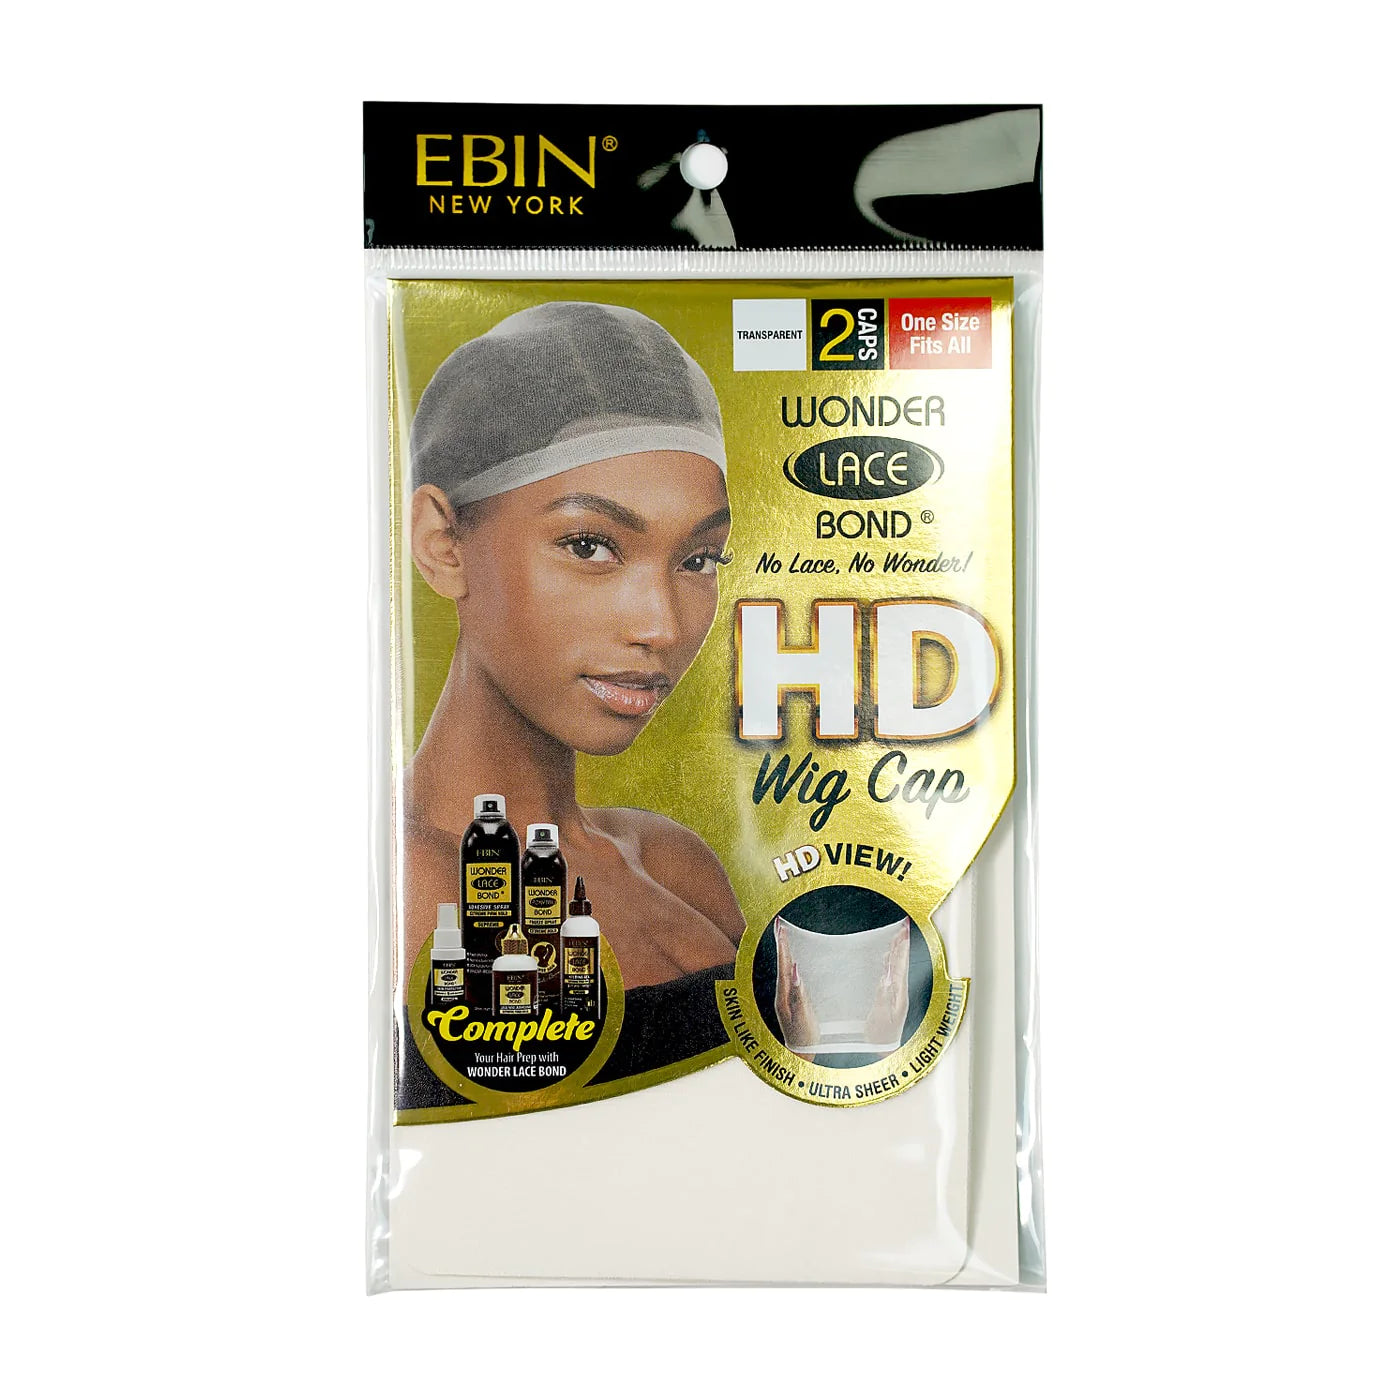 Ebin WONDER LACE BOND HD WIG CAPS